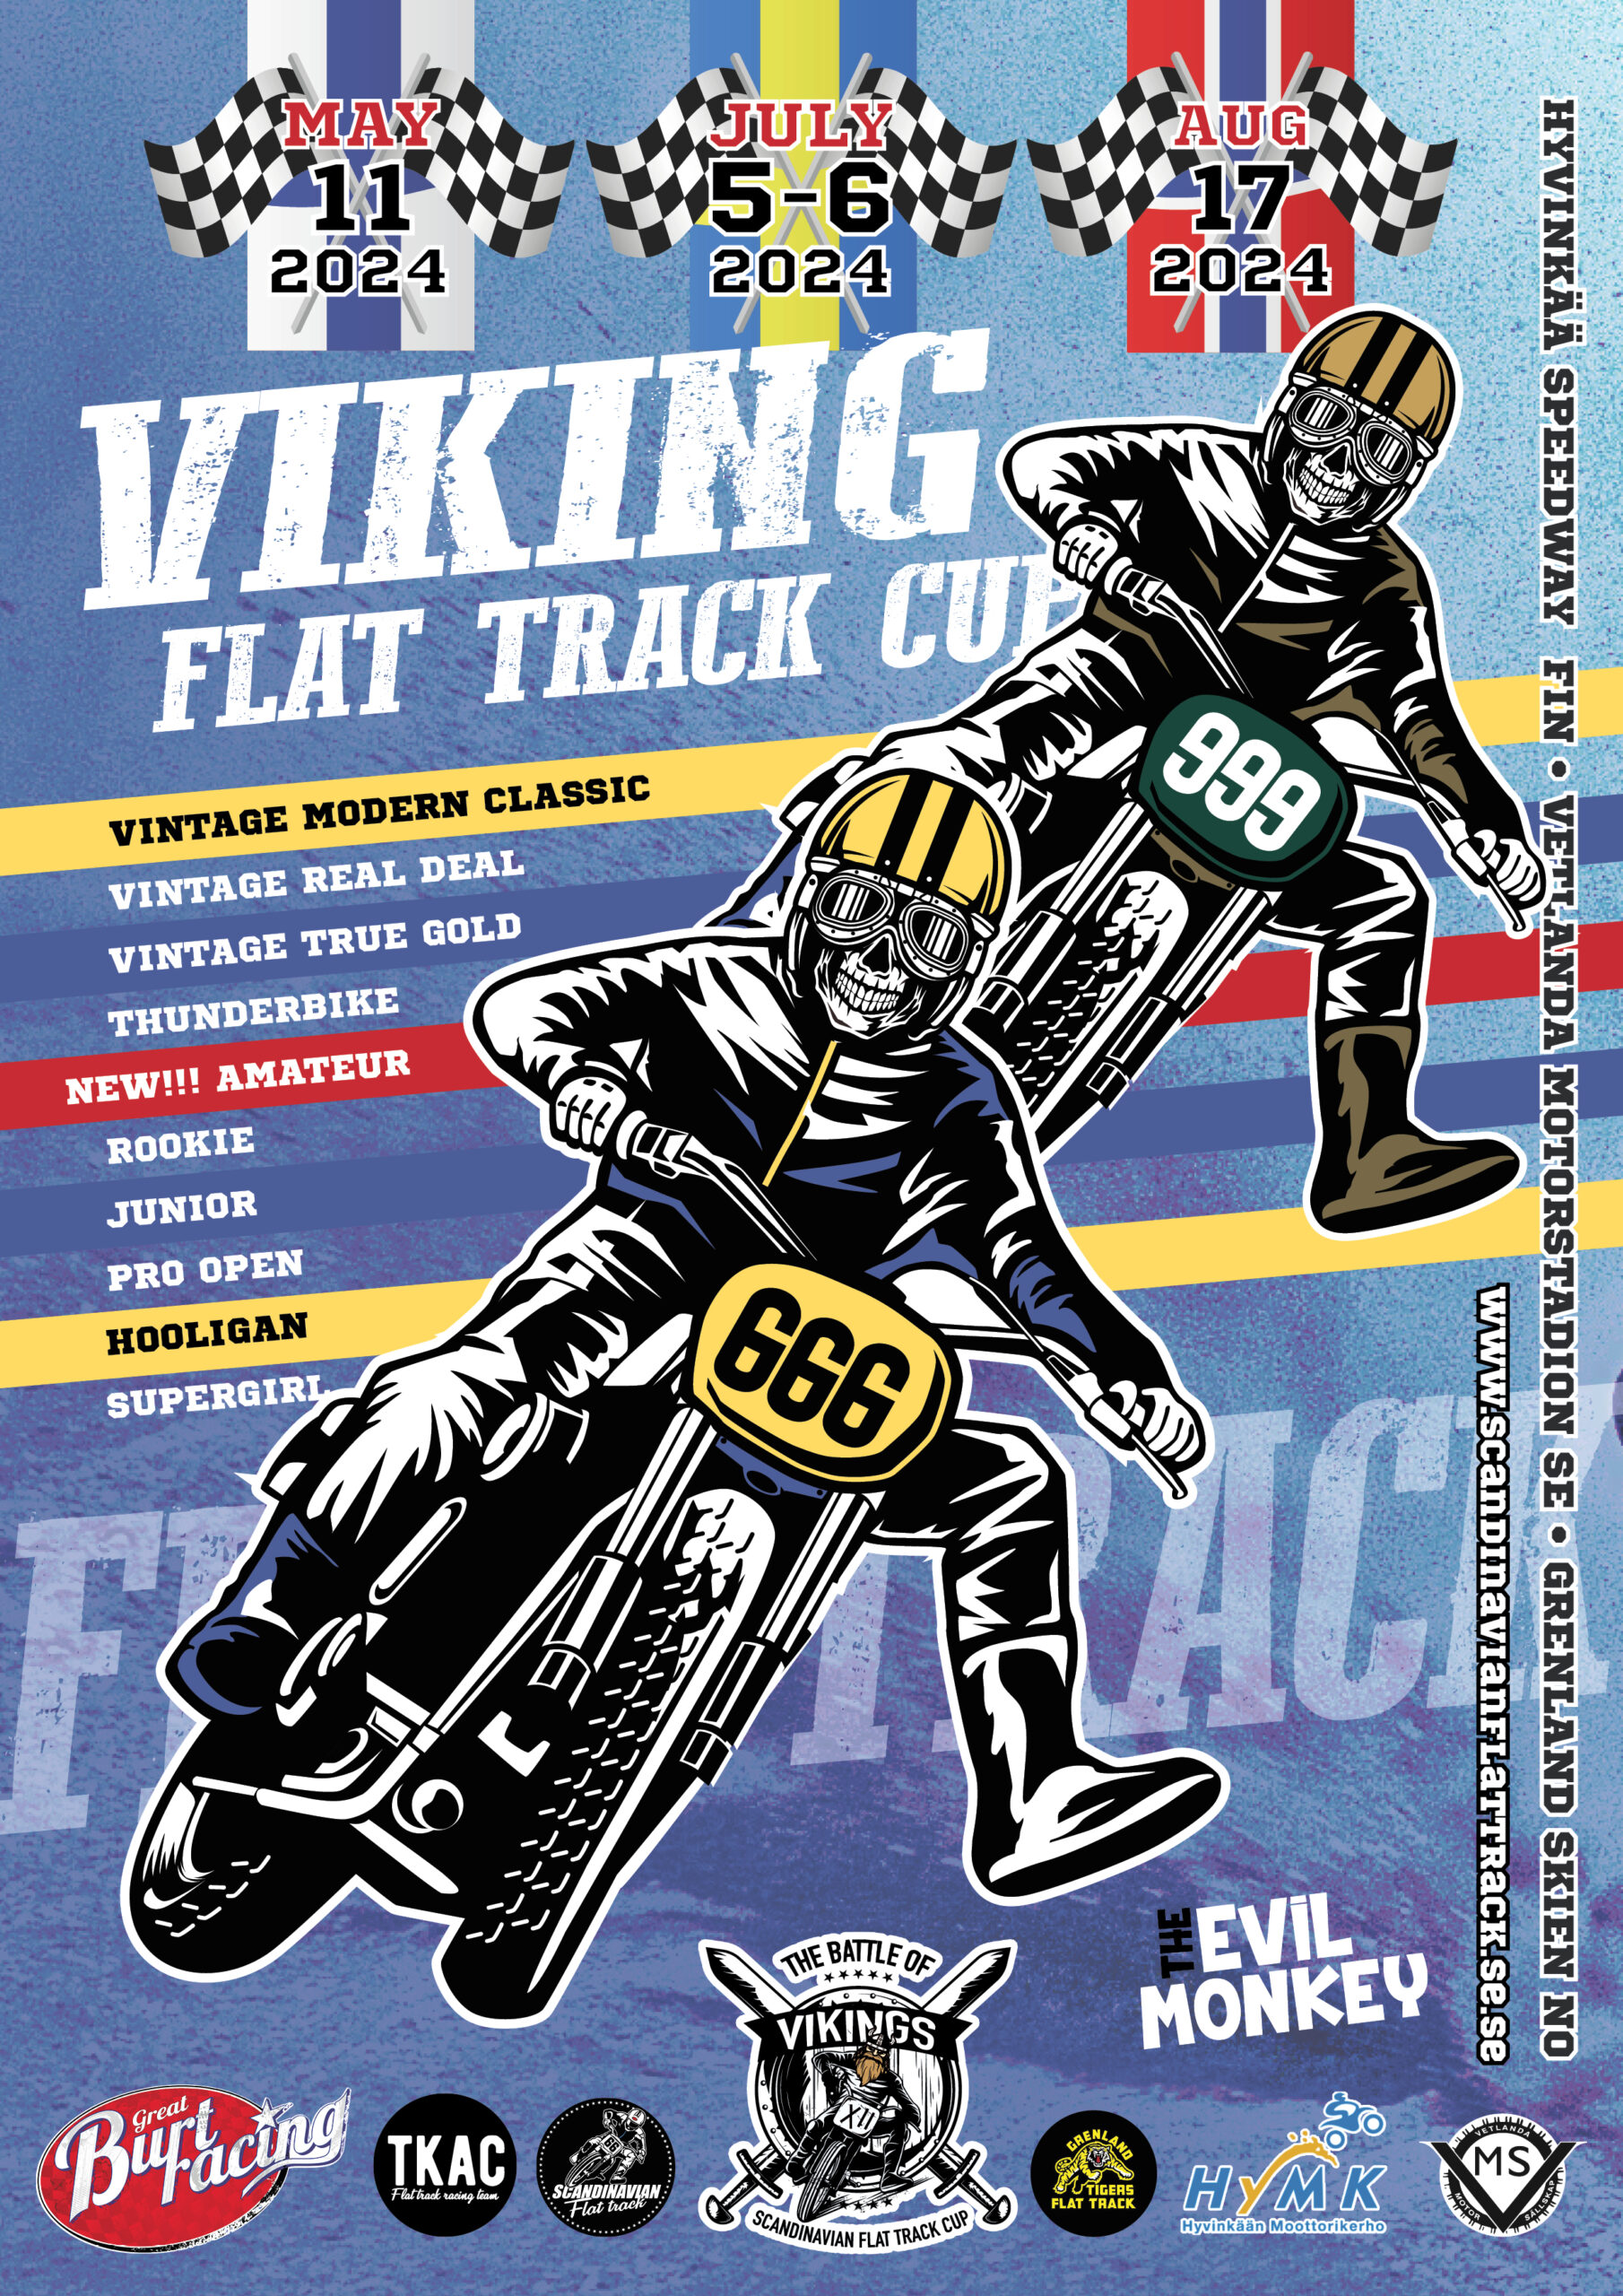 Battle of Vikings – Scandinavian Flat track Cup